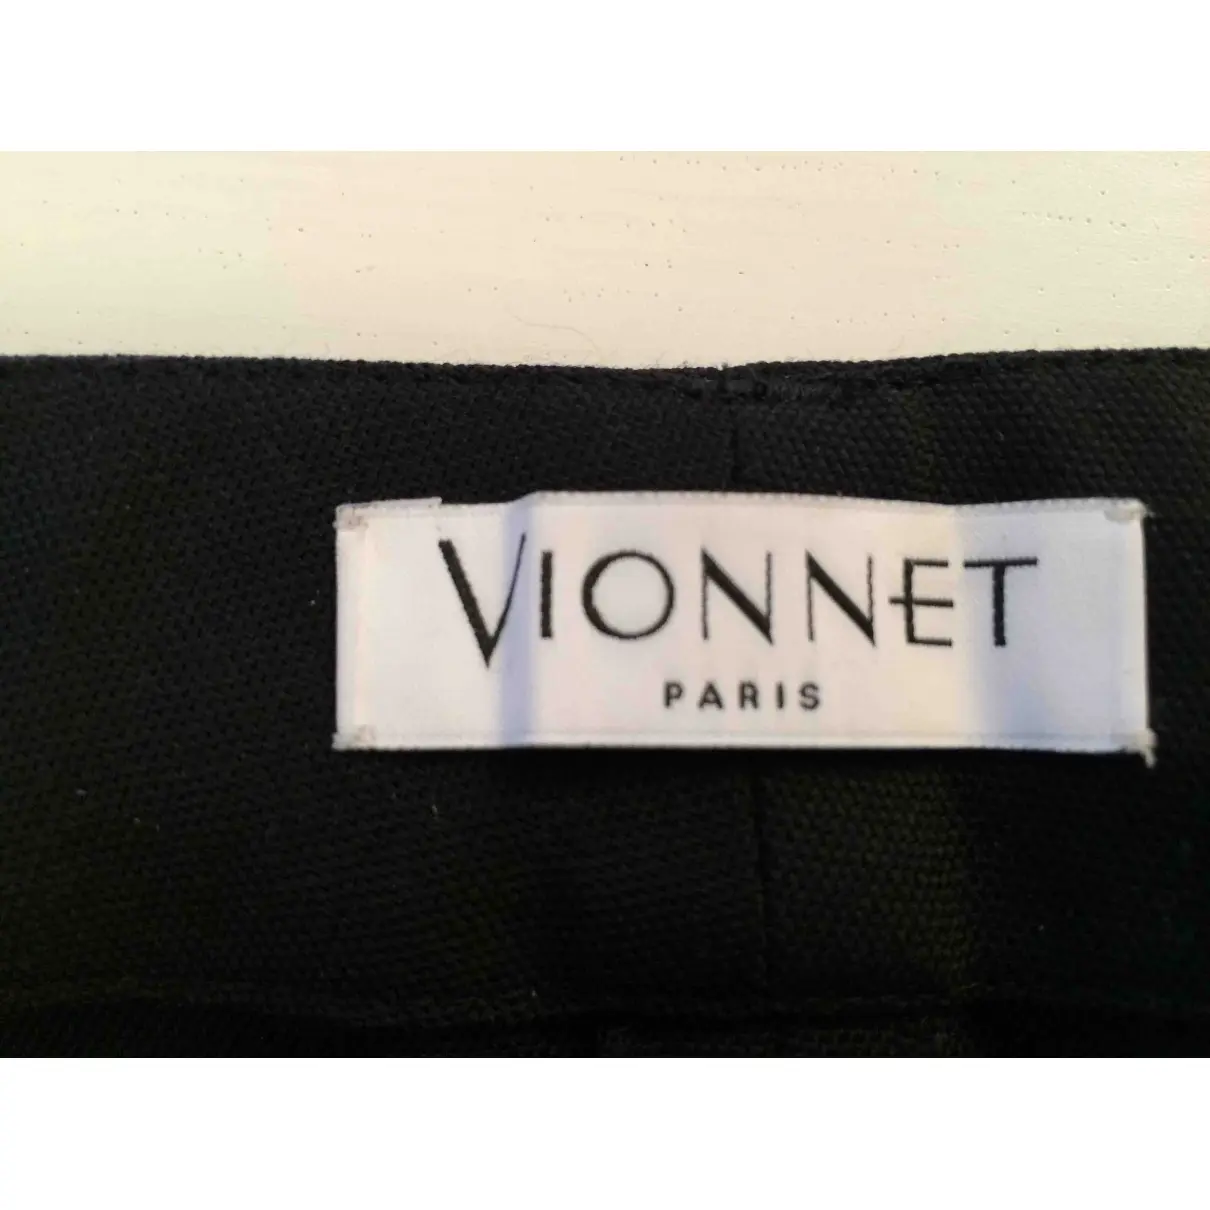 Buy Vionnet Cloth straight pants online